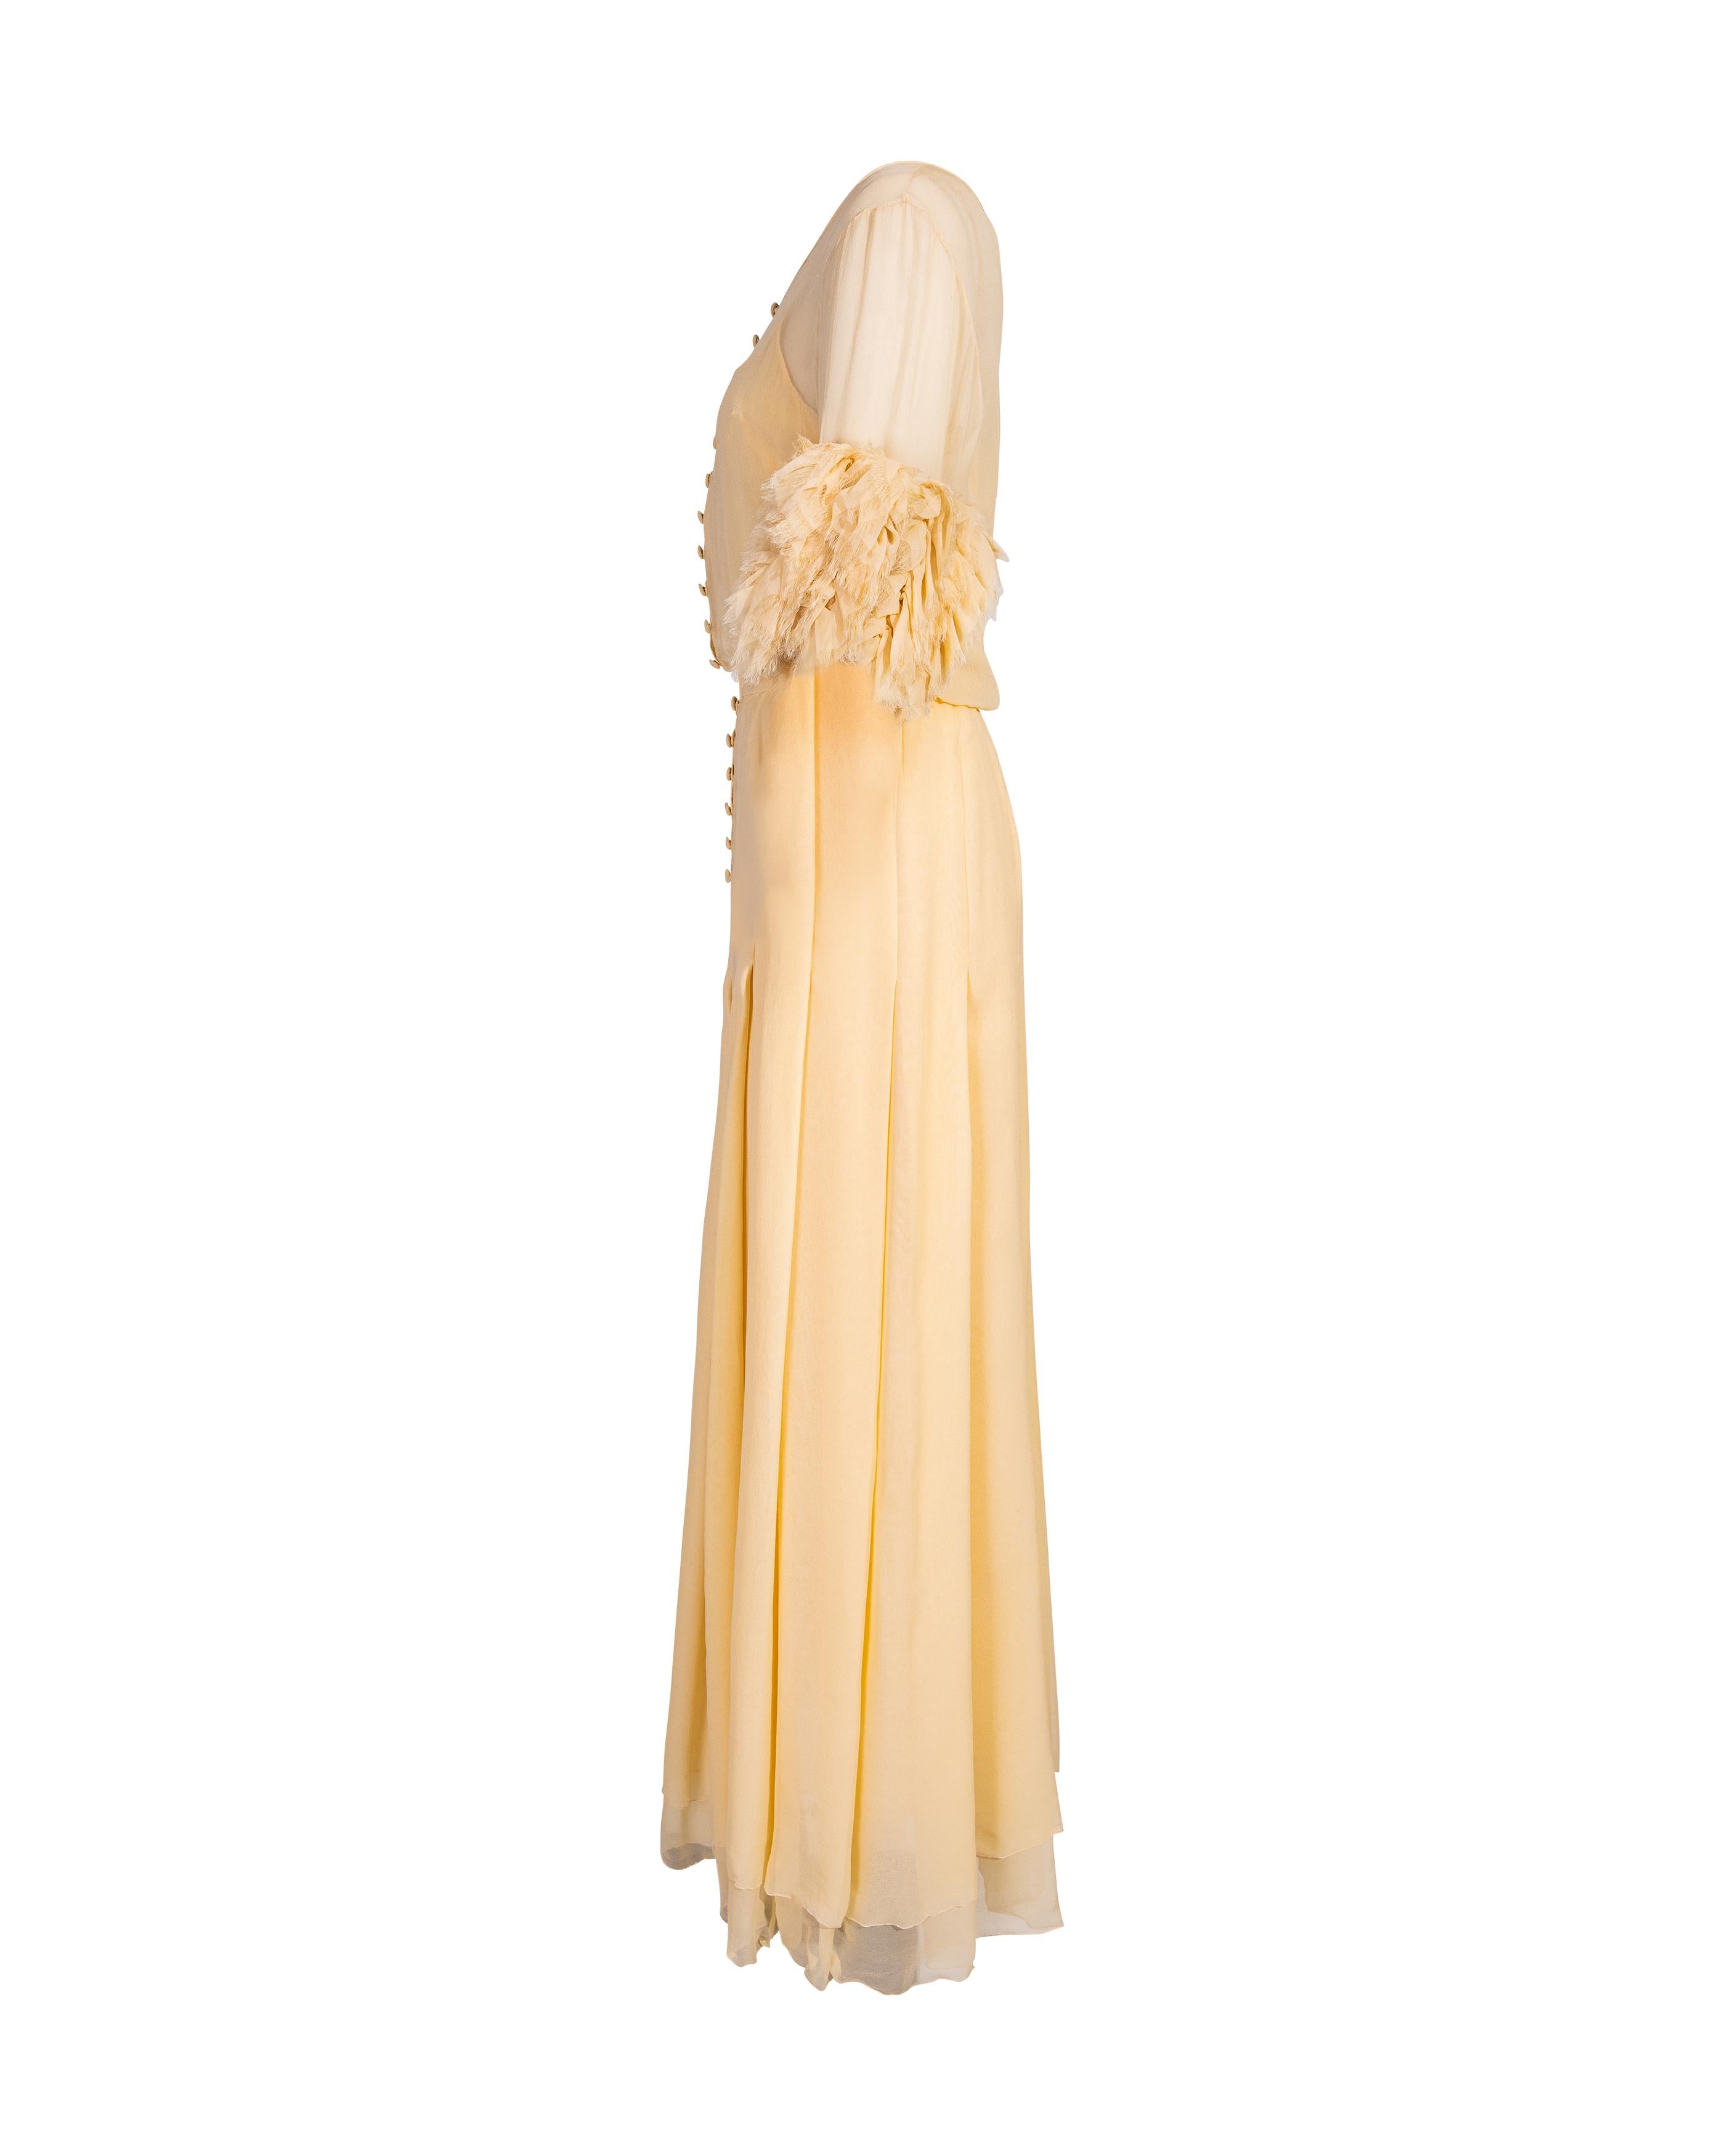 Women's S/S 1984 Chanel by Karl Lagerfeld Butter Yellow Silk Chiffon Gown